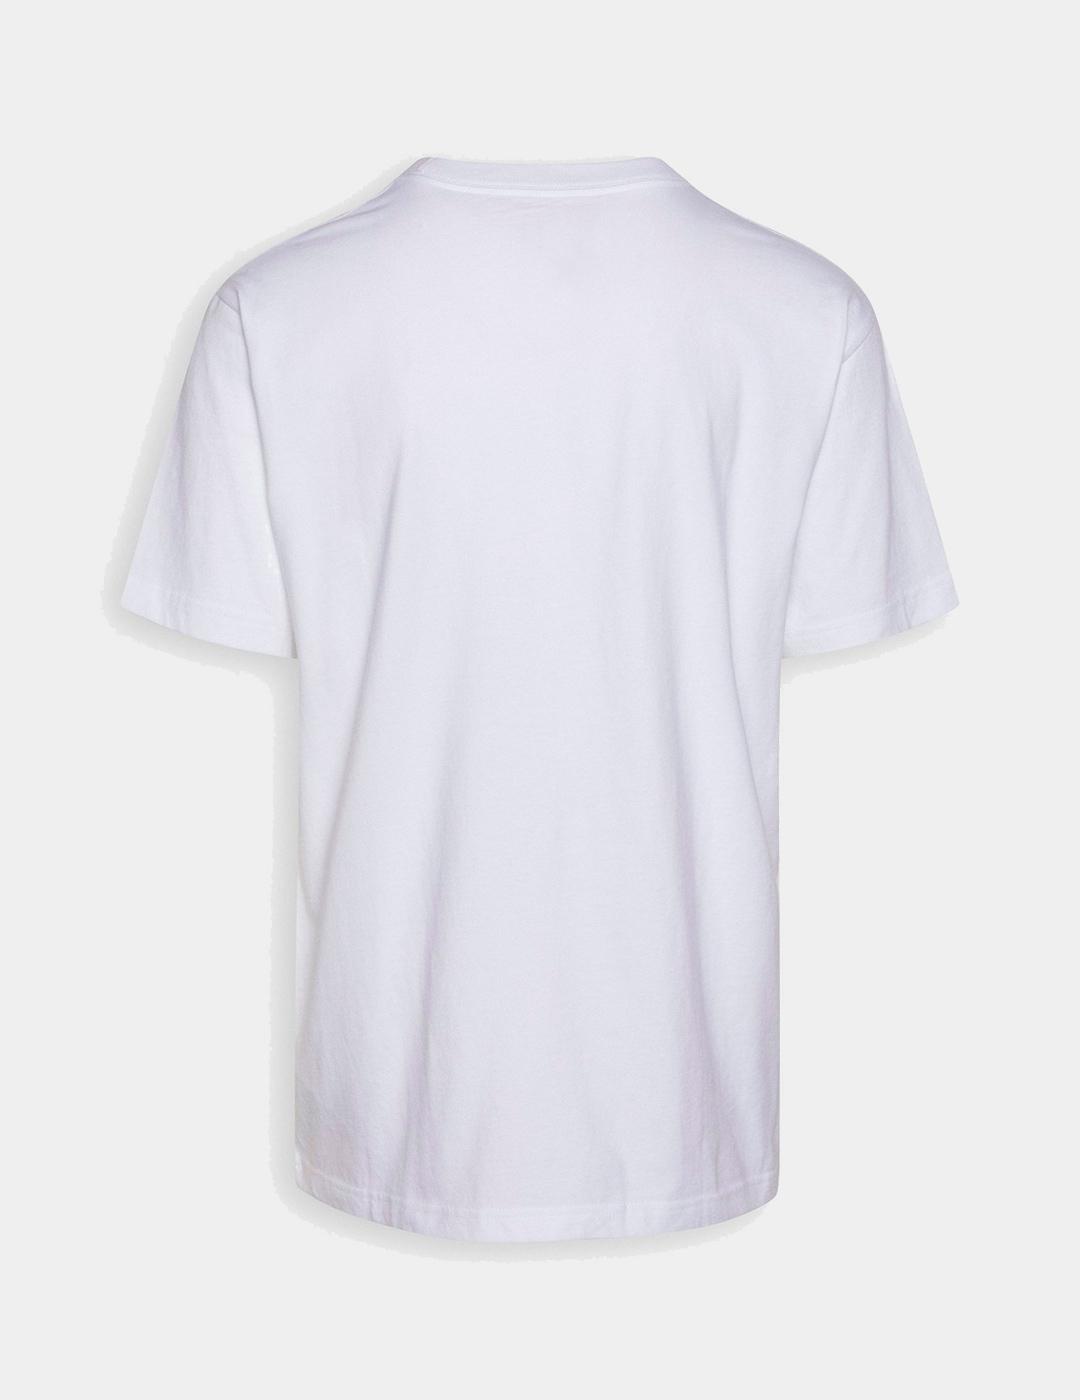 Camiseta DC SHOES STAR FILL - White/Camo